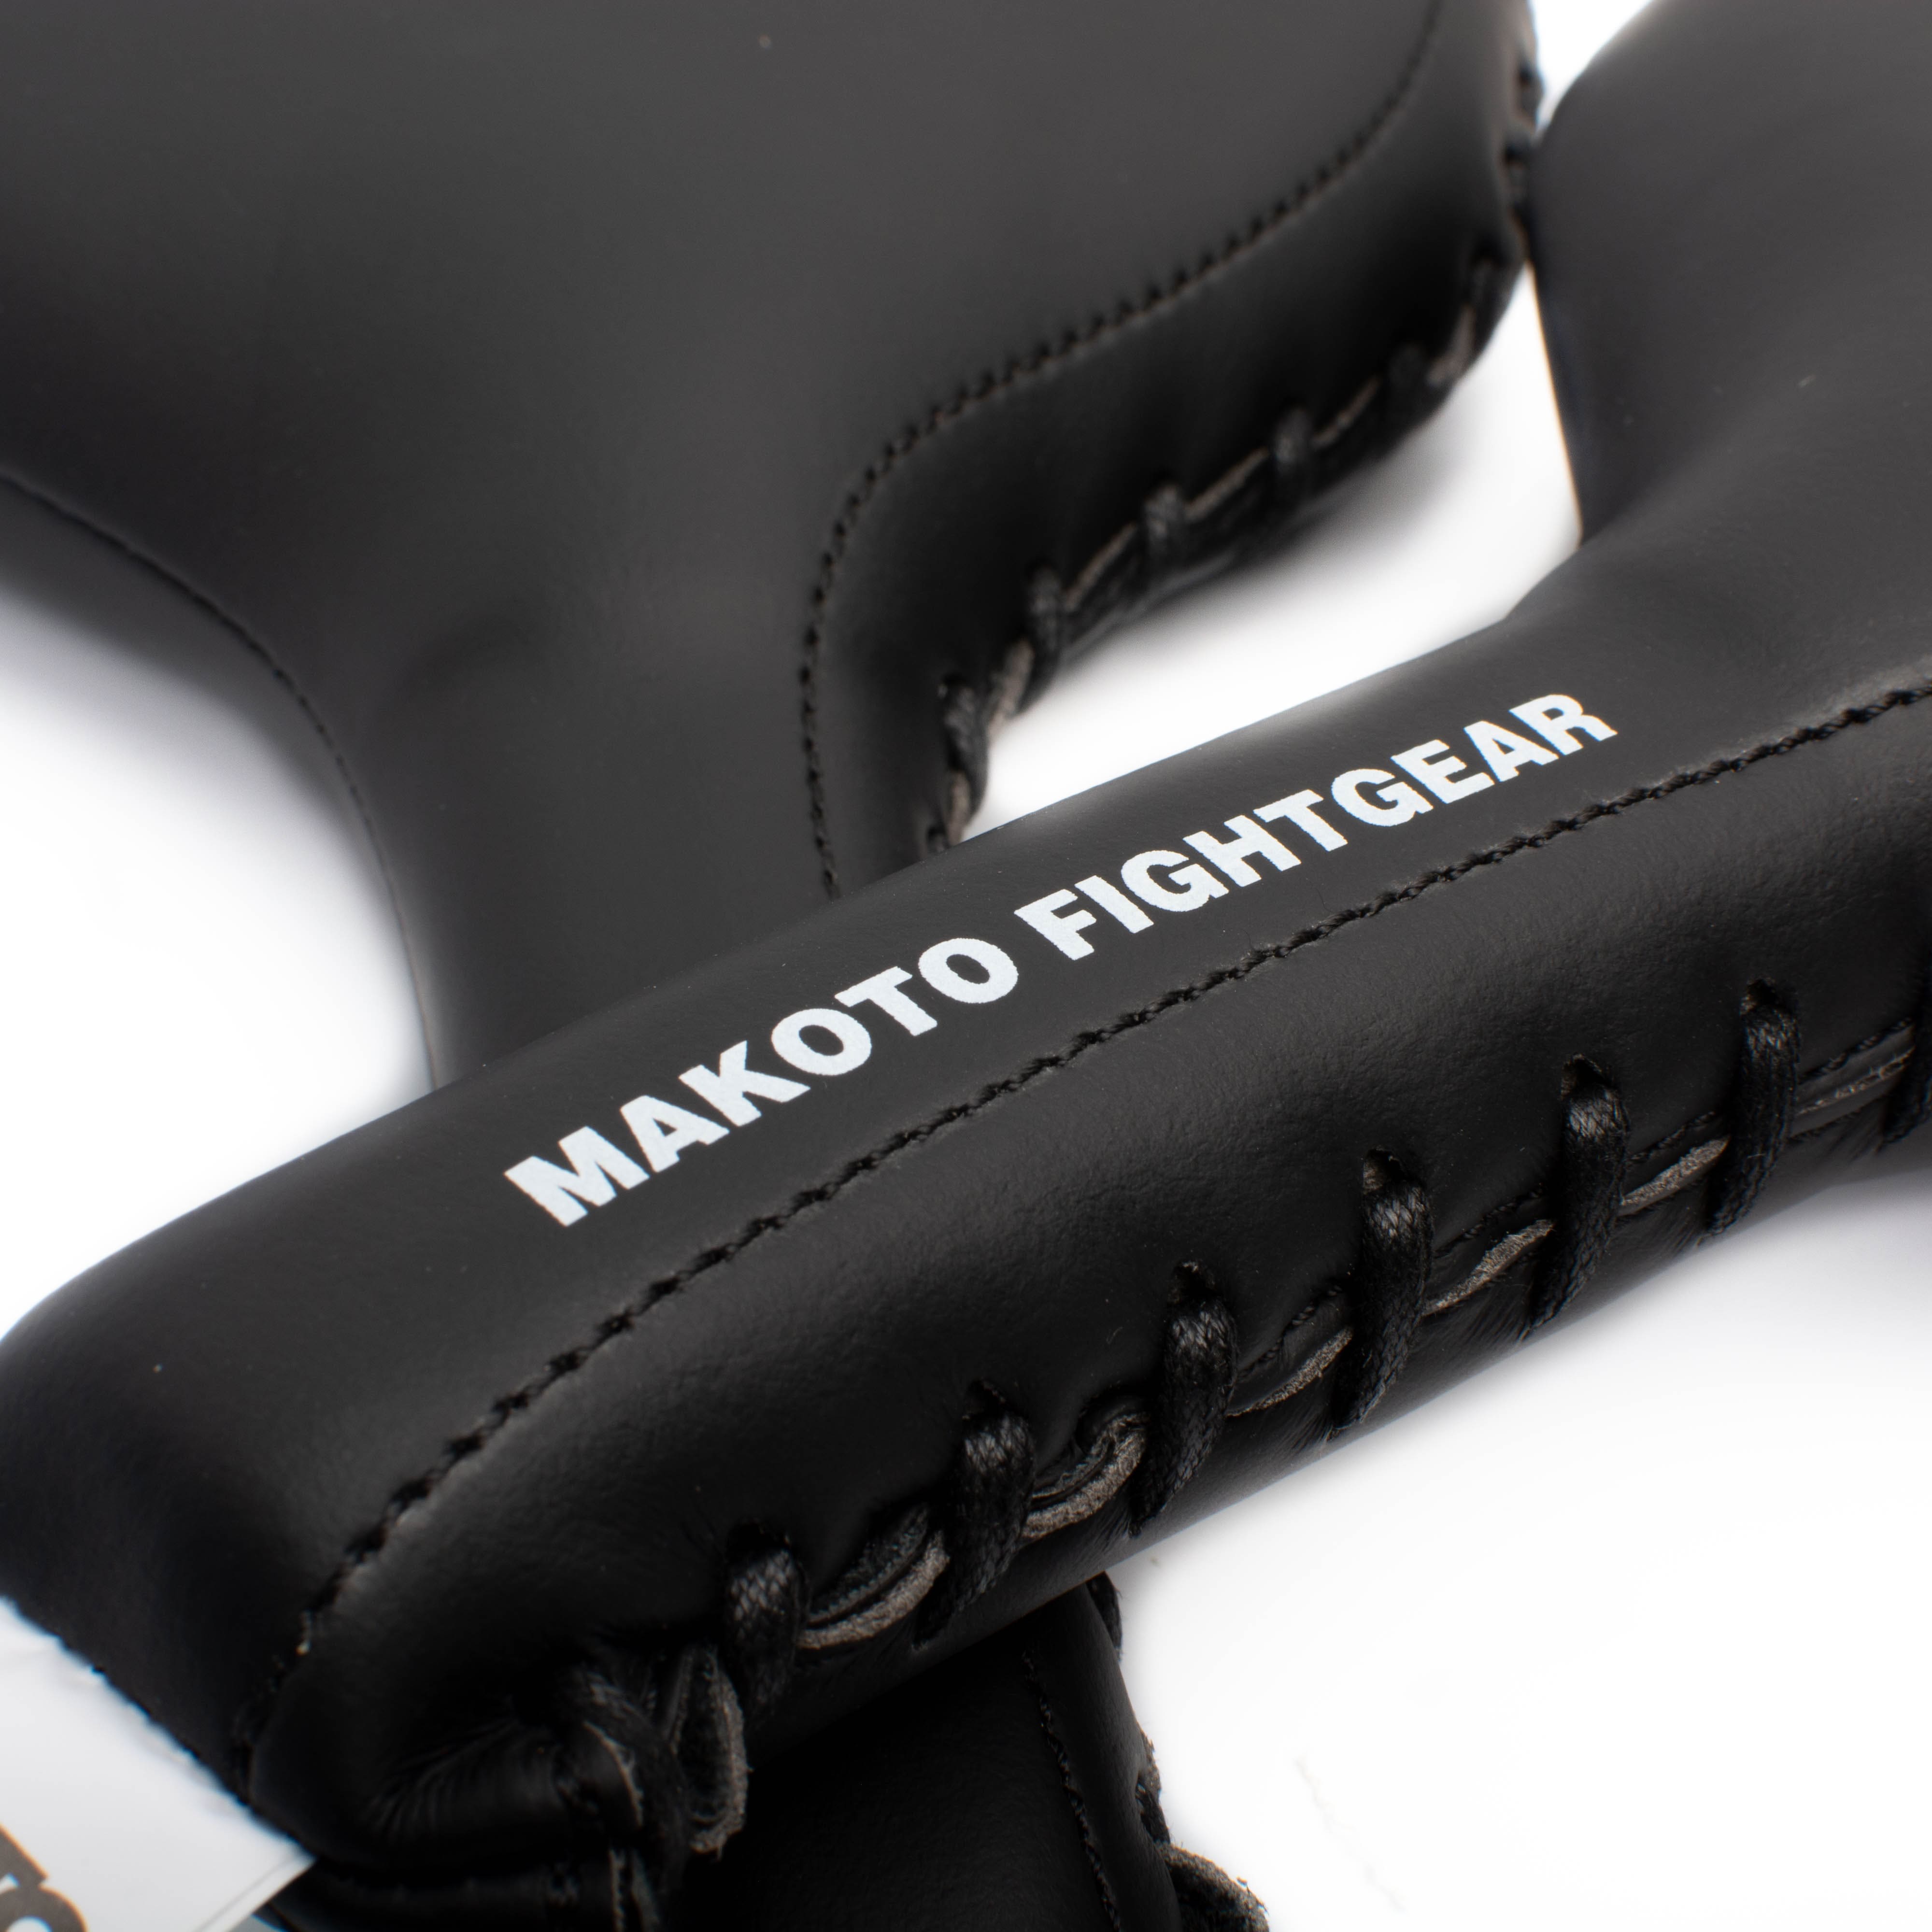 Paddles de Boxeo Makoto Negro - 100% Microfibra